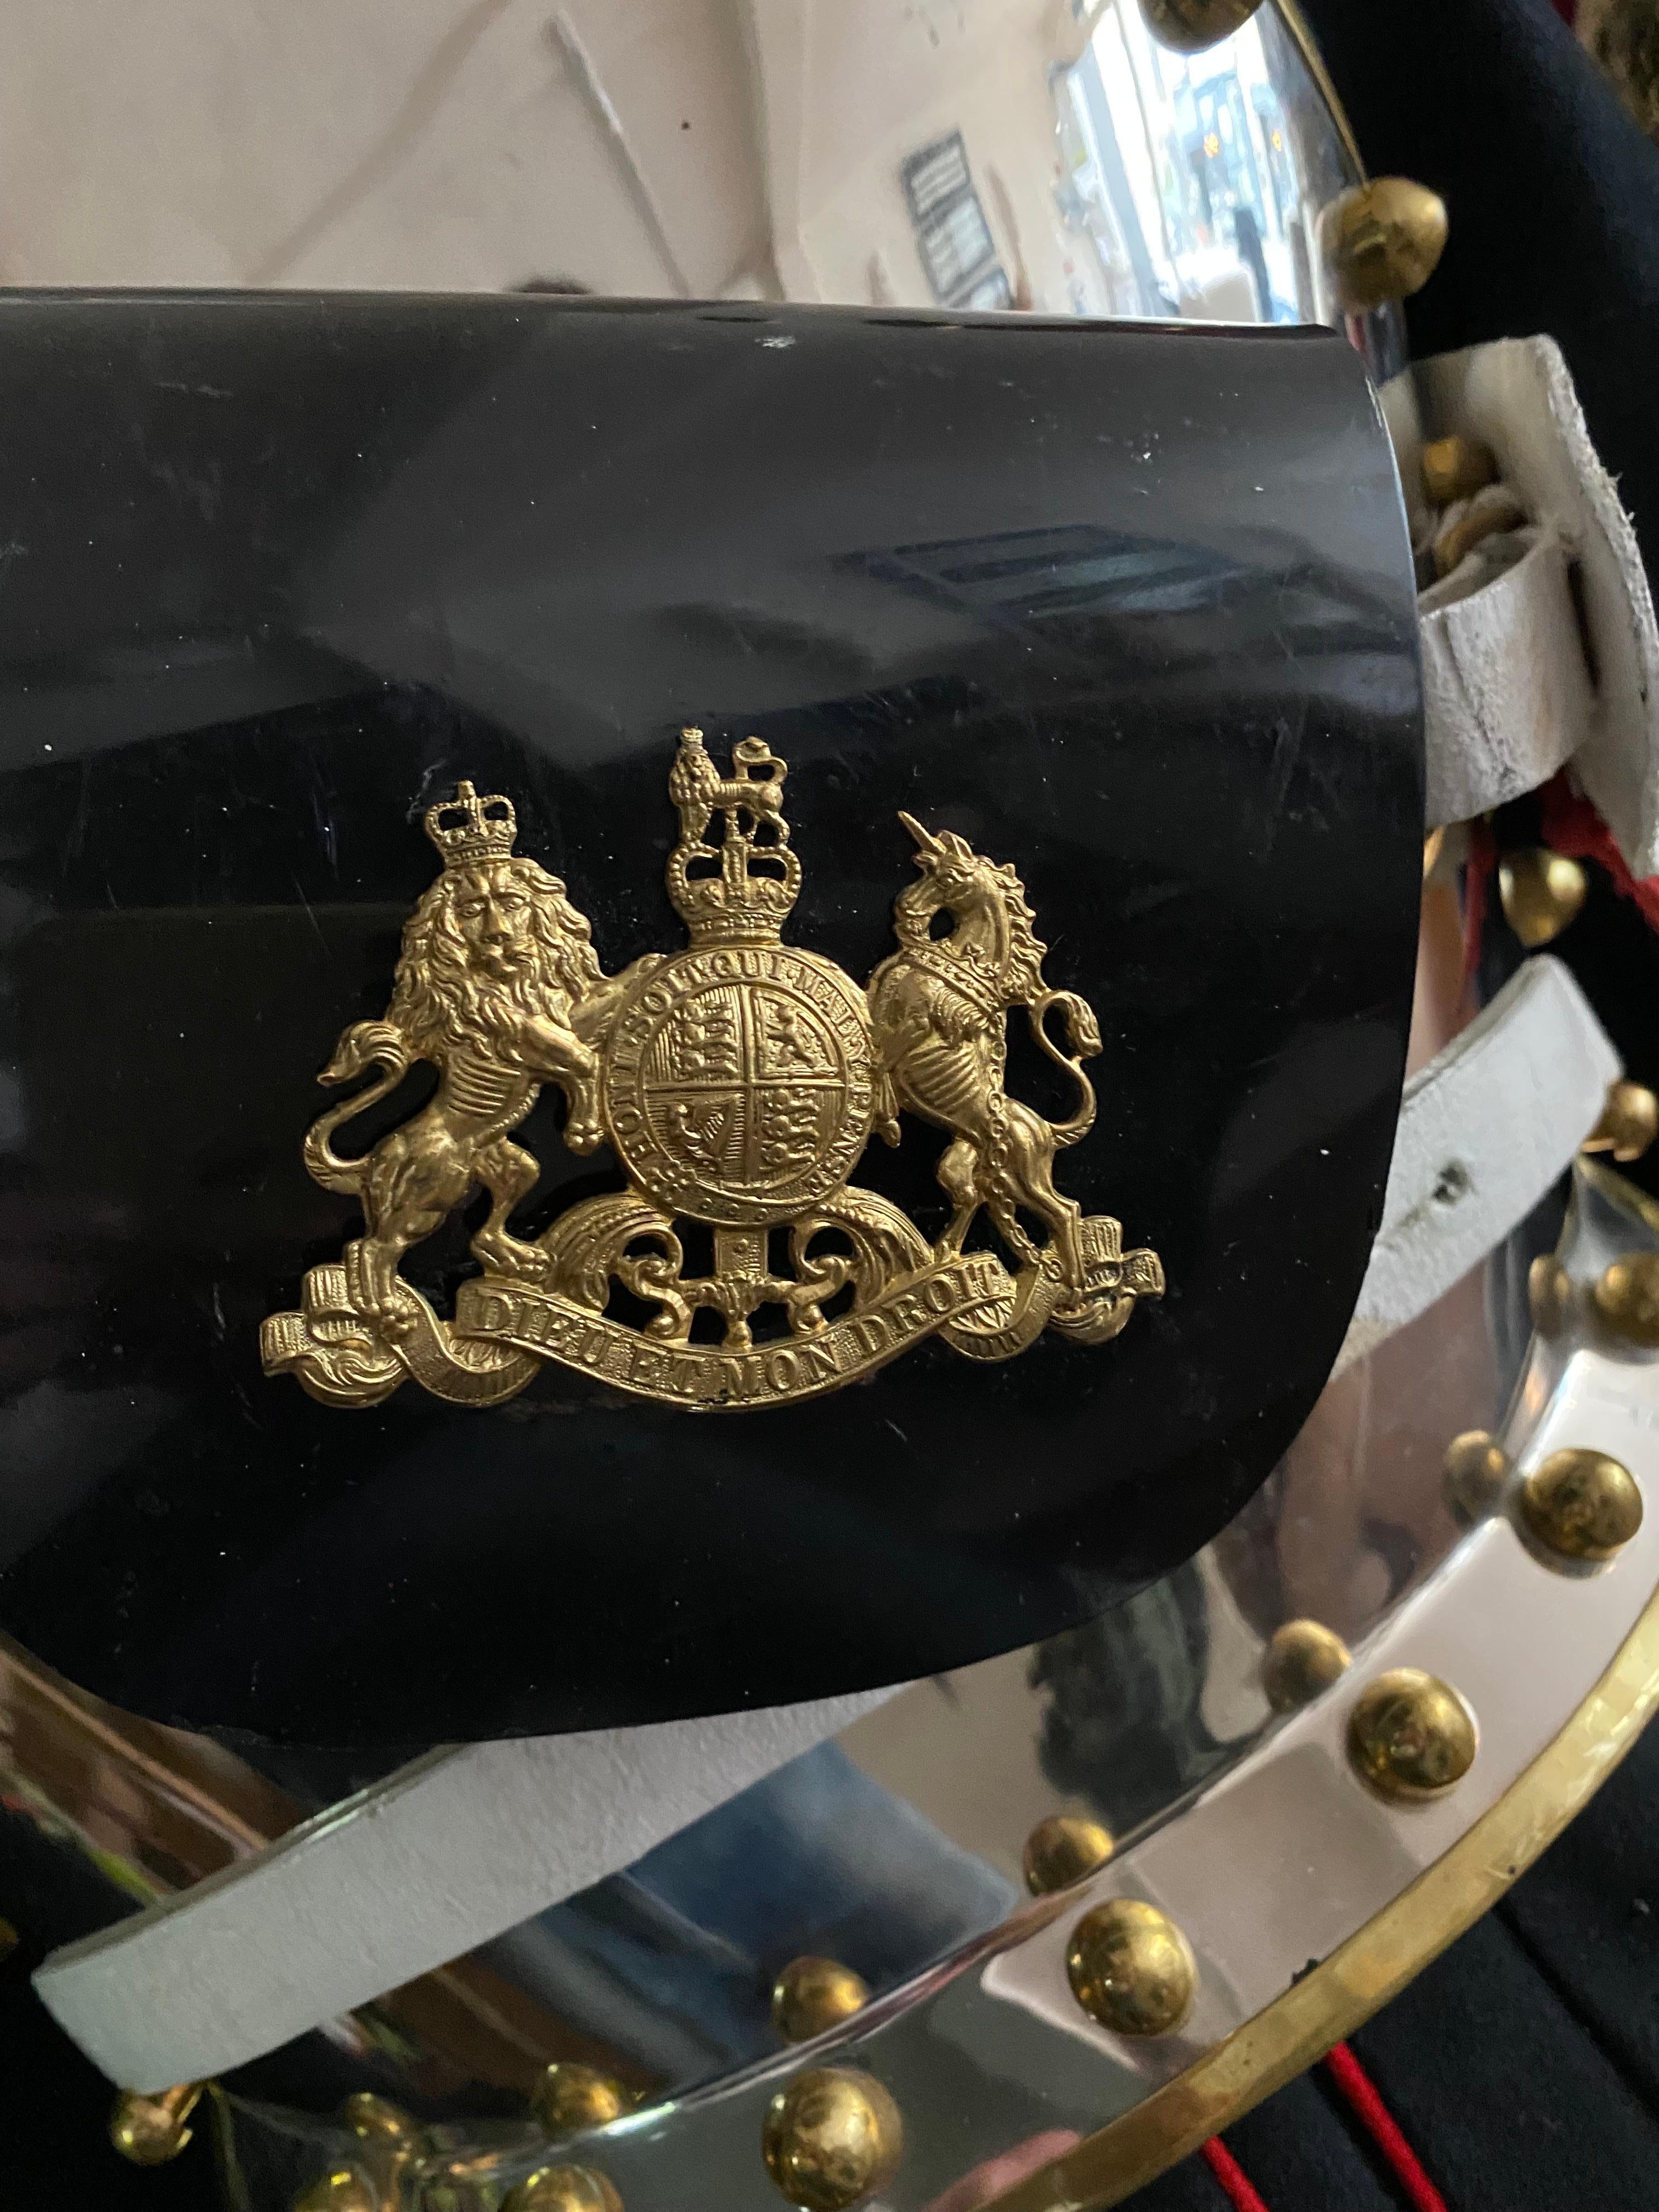 Queen Elizabeth II Era Household Cavalry Uniform - The Blues and Royals 2